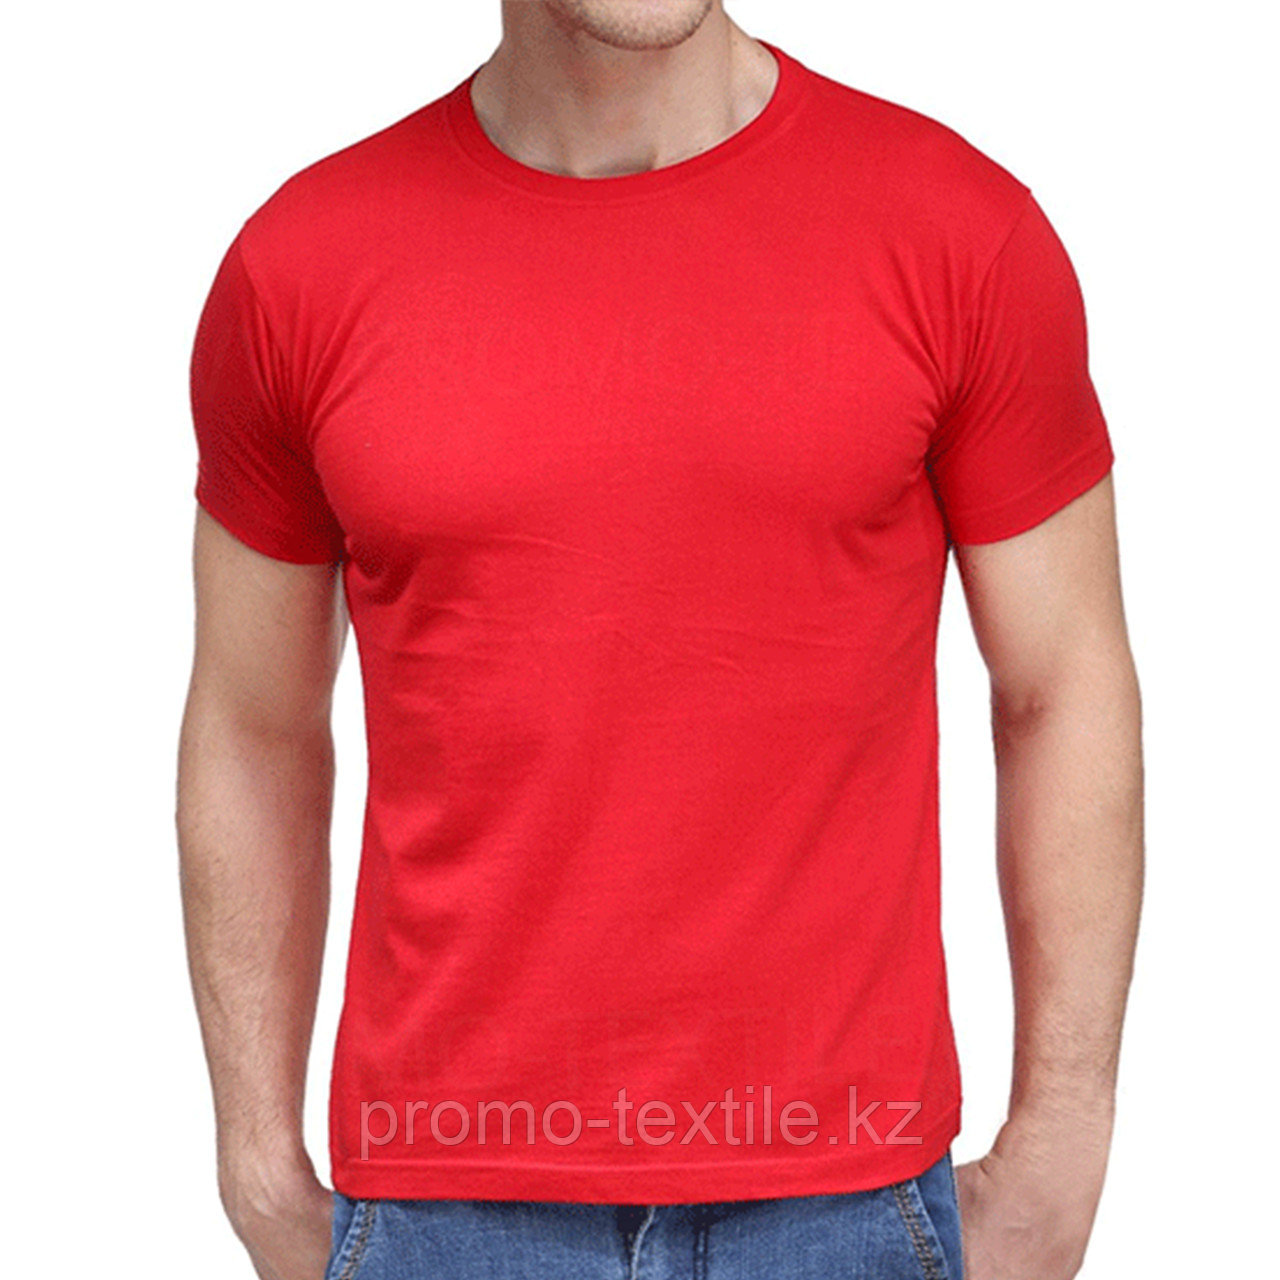 Пошив футболки драй фит (drifit) красного цвета  I Футболка красная на заказ